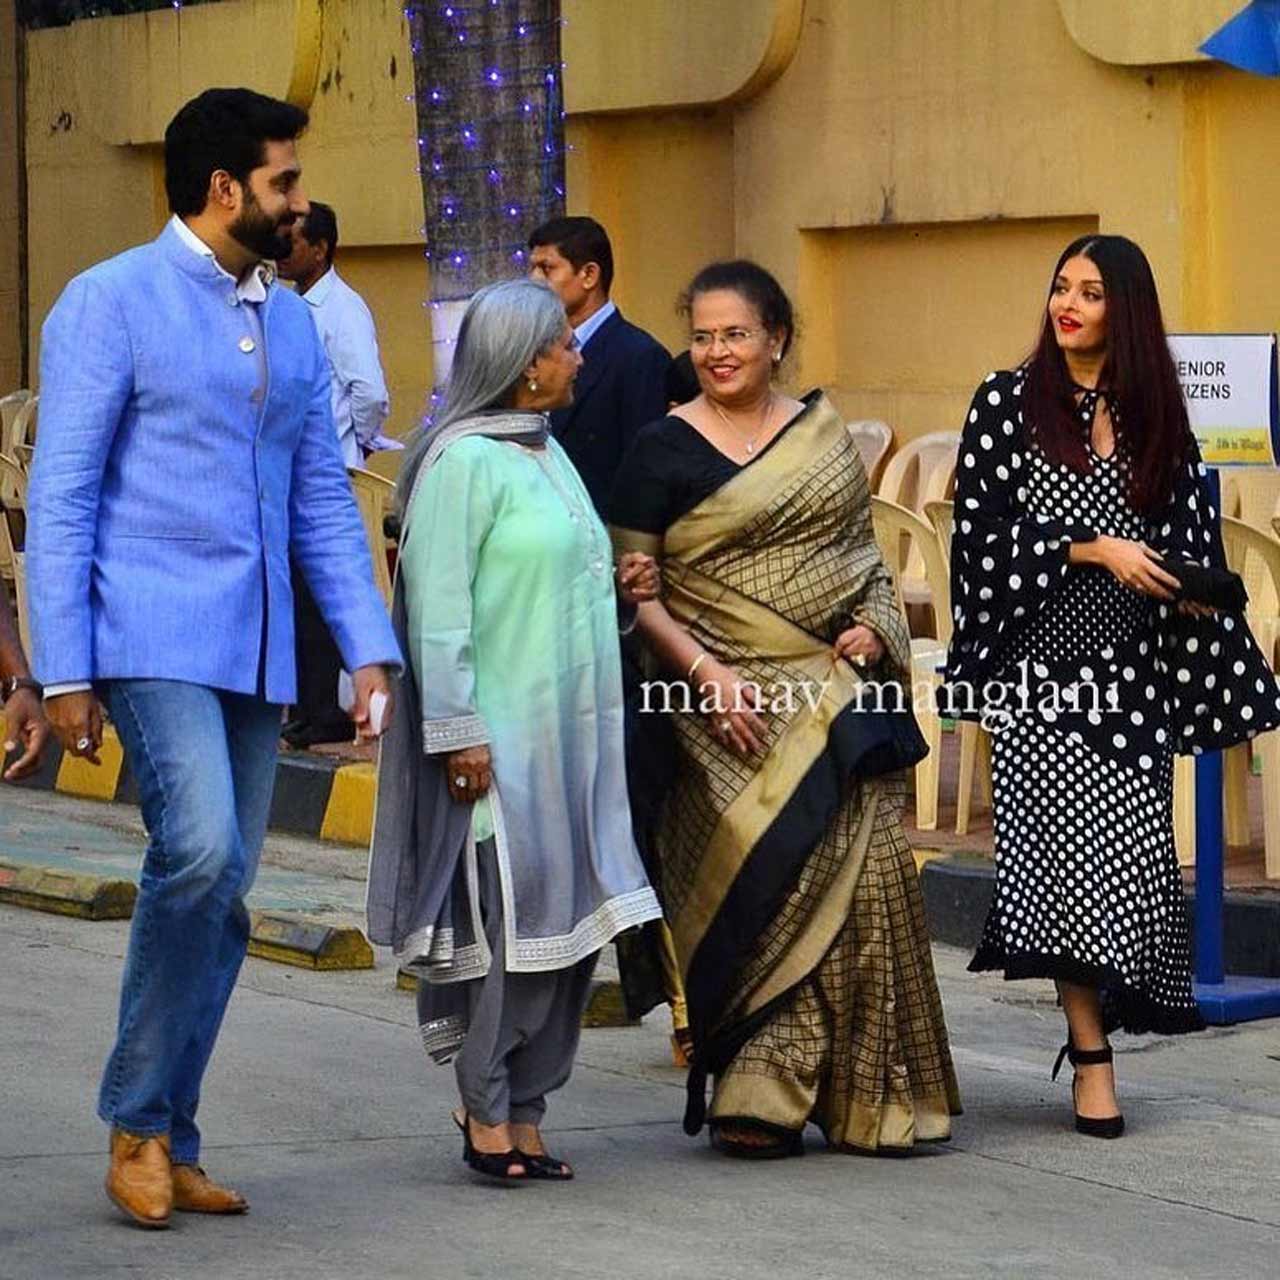 Abhishek Bachchan posted this one with the caption 'mommies' which has Brinda Rai, Jaya Bachchan and Aishwarya Rai Bachchan in one frame as they walk together with Abhishek.